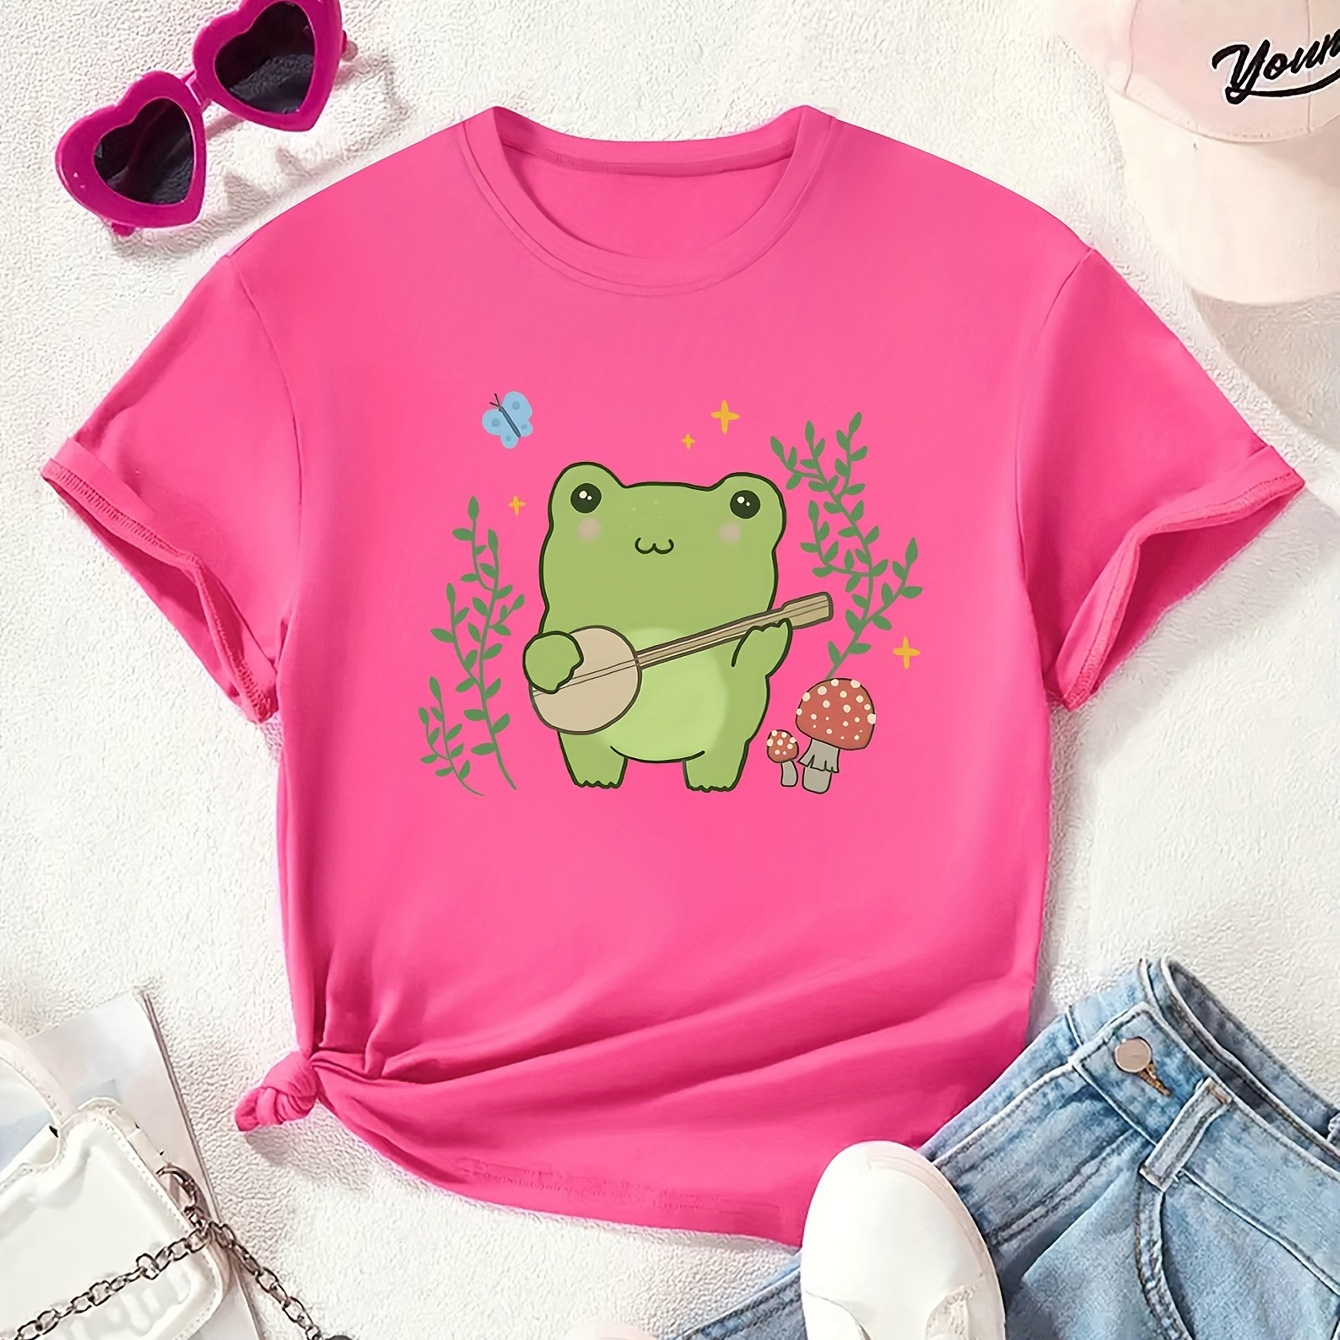 

Cartoon Frog Graphic Print Creative T-shirts, Soft & Elastic Comfy Crew Neck Short Sleeve Tee, Girls' Summer Tops